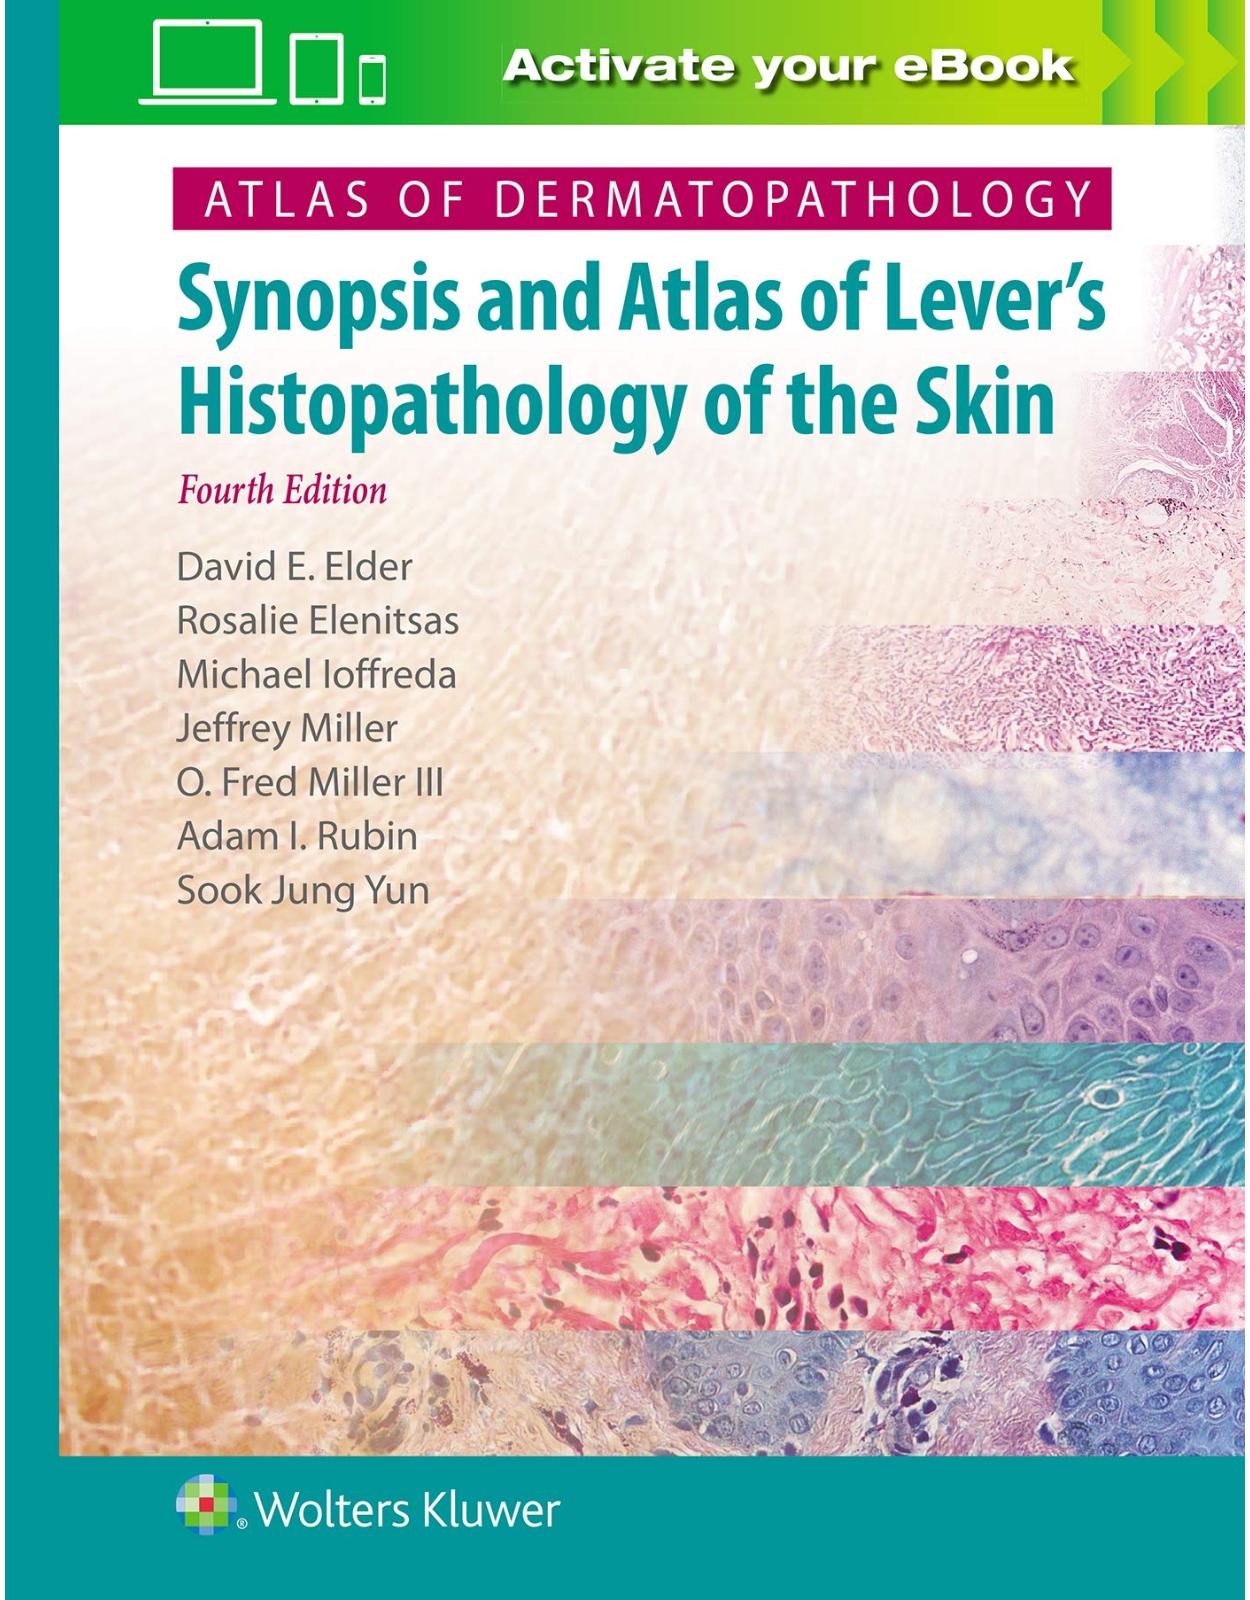 Atlas of Dermatopathology: Synopsis and Atlas of Lever's Histopathology of the Skin